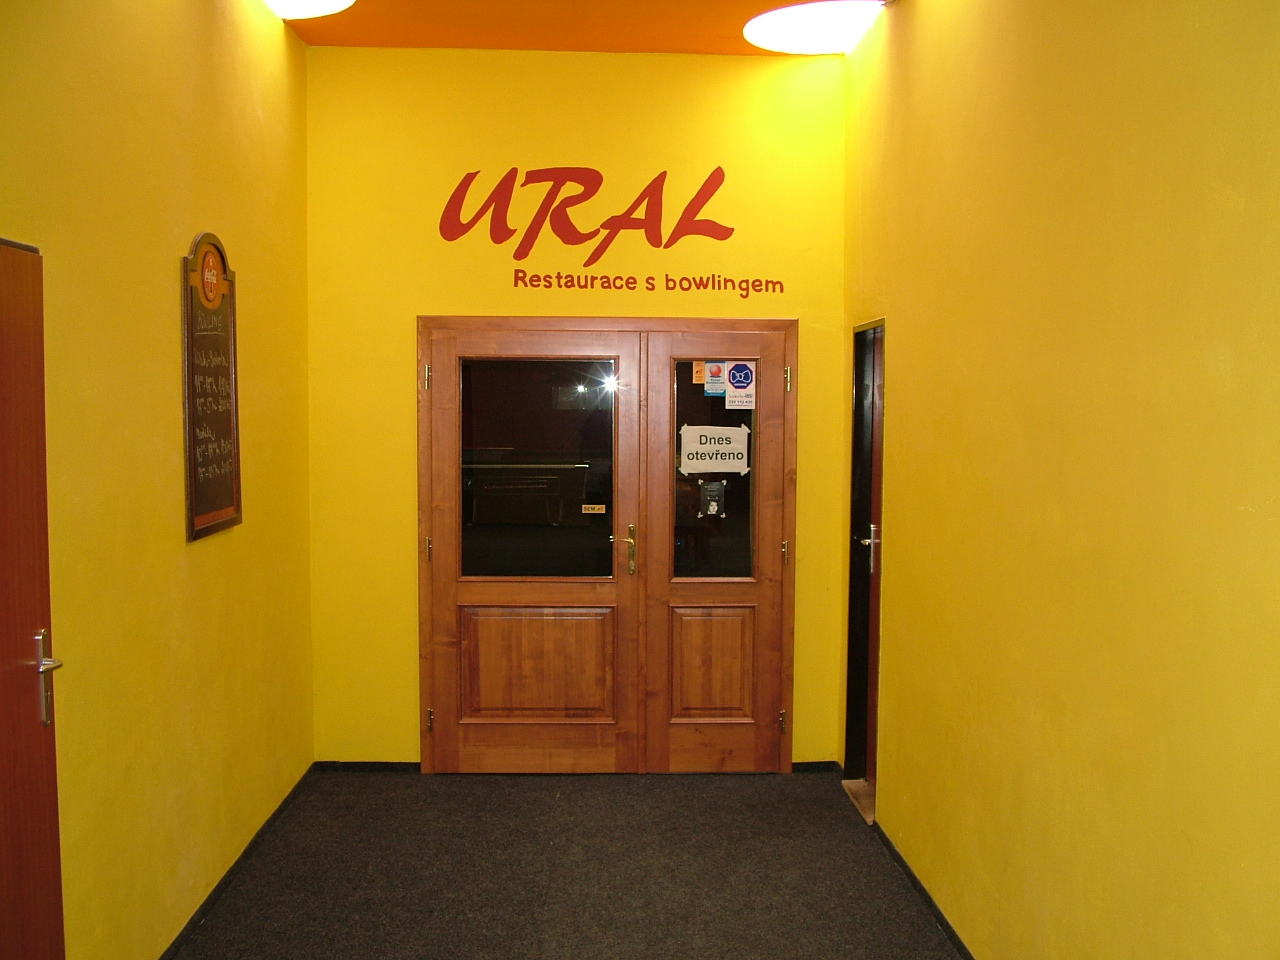 Fotka stavby restaurace Ural